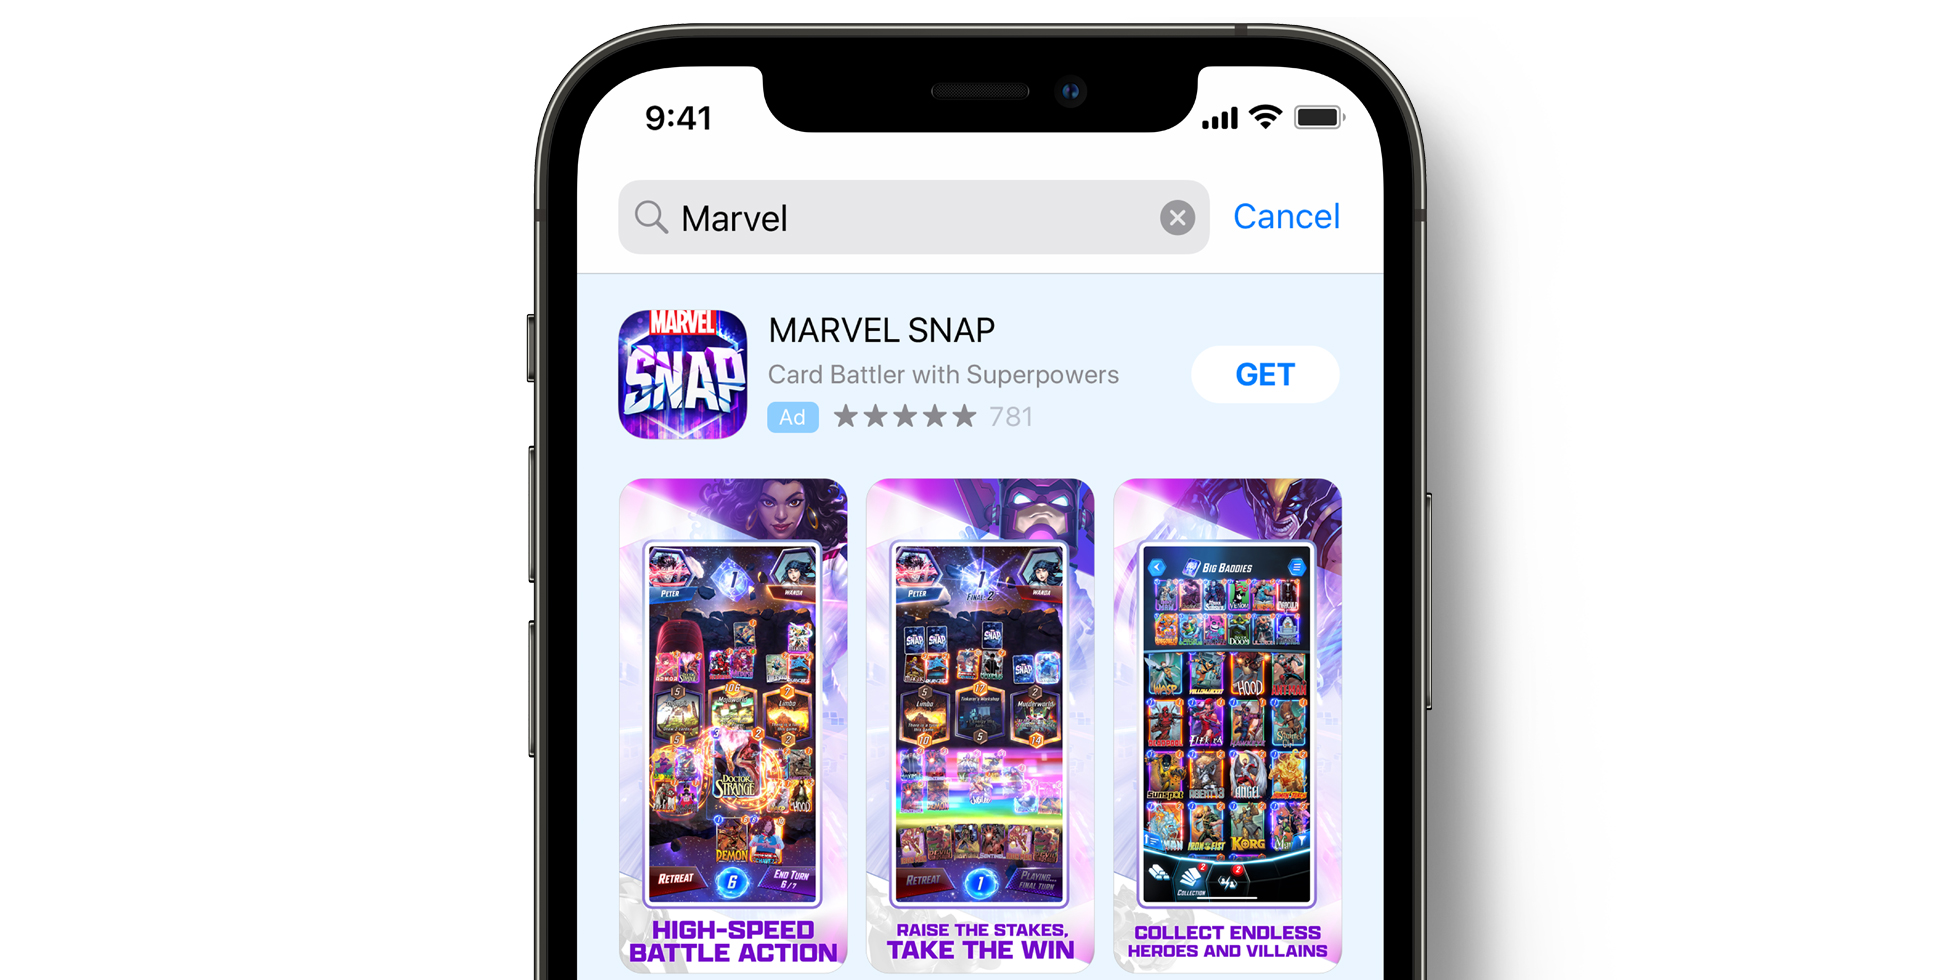 MARVEL SNAP Werbung im App Store